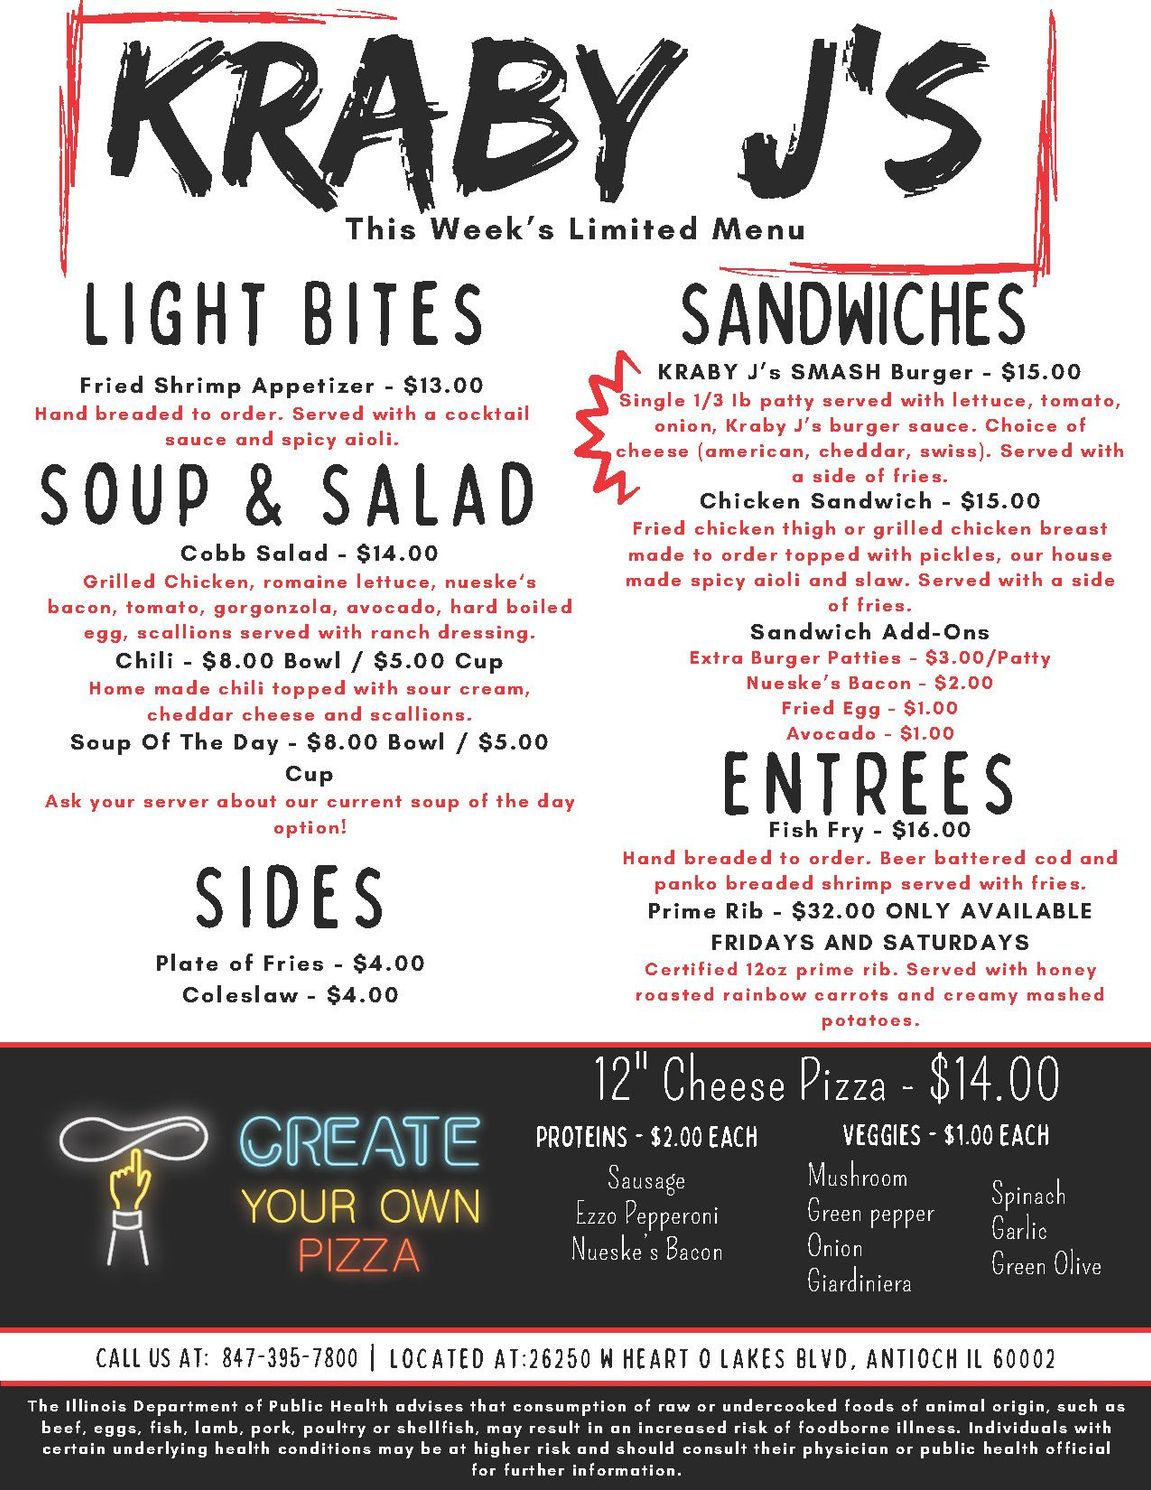 Kraby J's menu includes soup, salad, light bites, sandwiches, and sides.